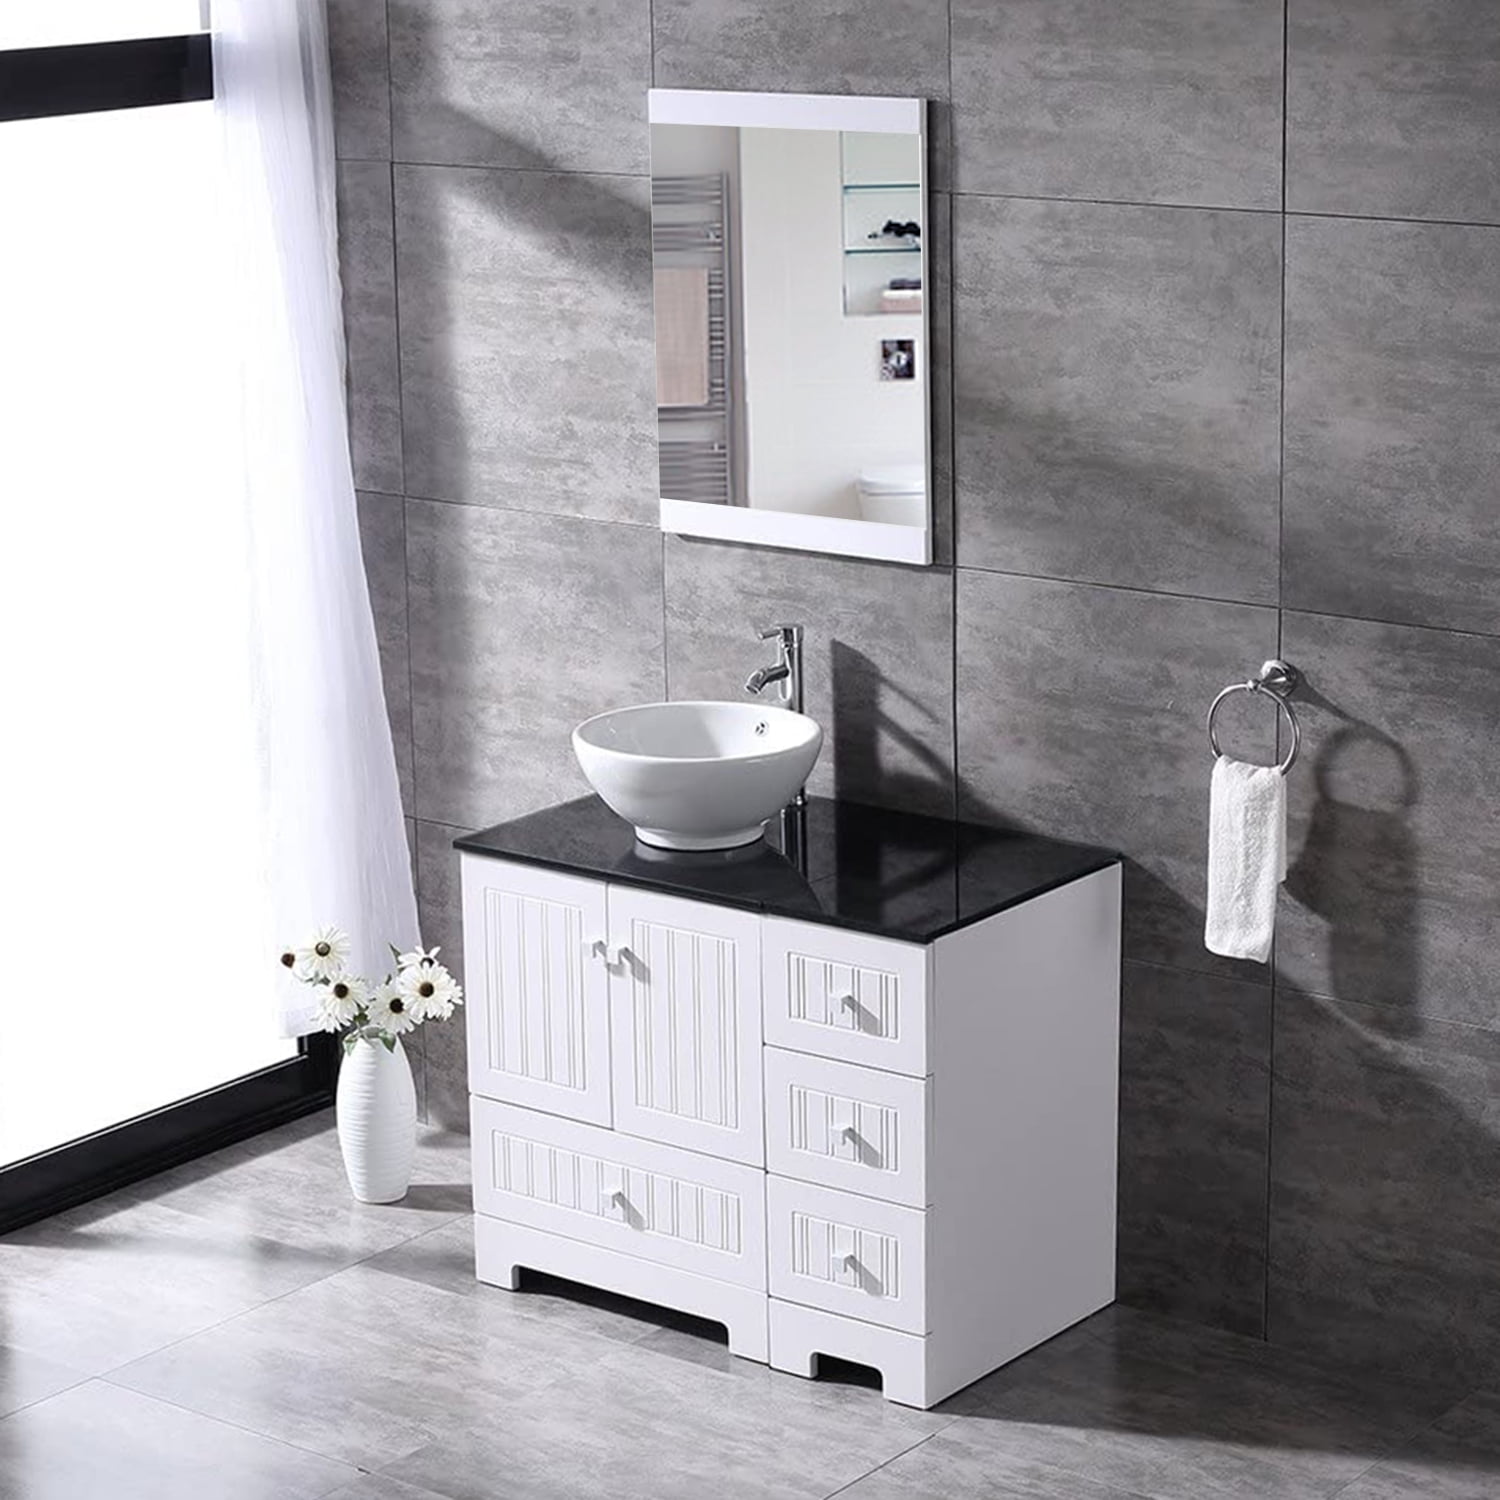 Wonline 36inch Bathroom Vanity with Sink Combo Modern Black